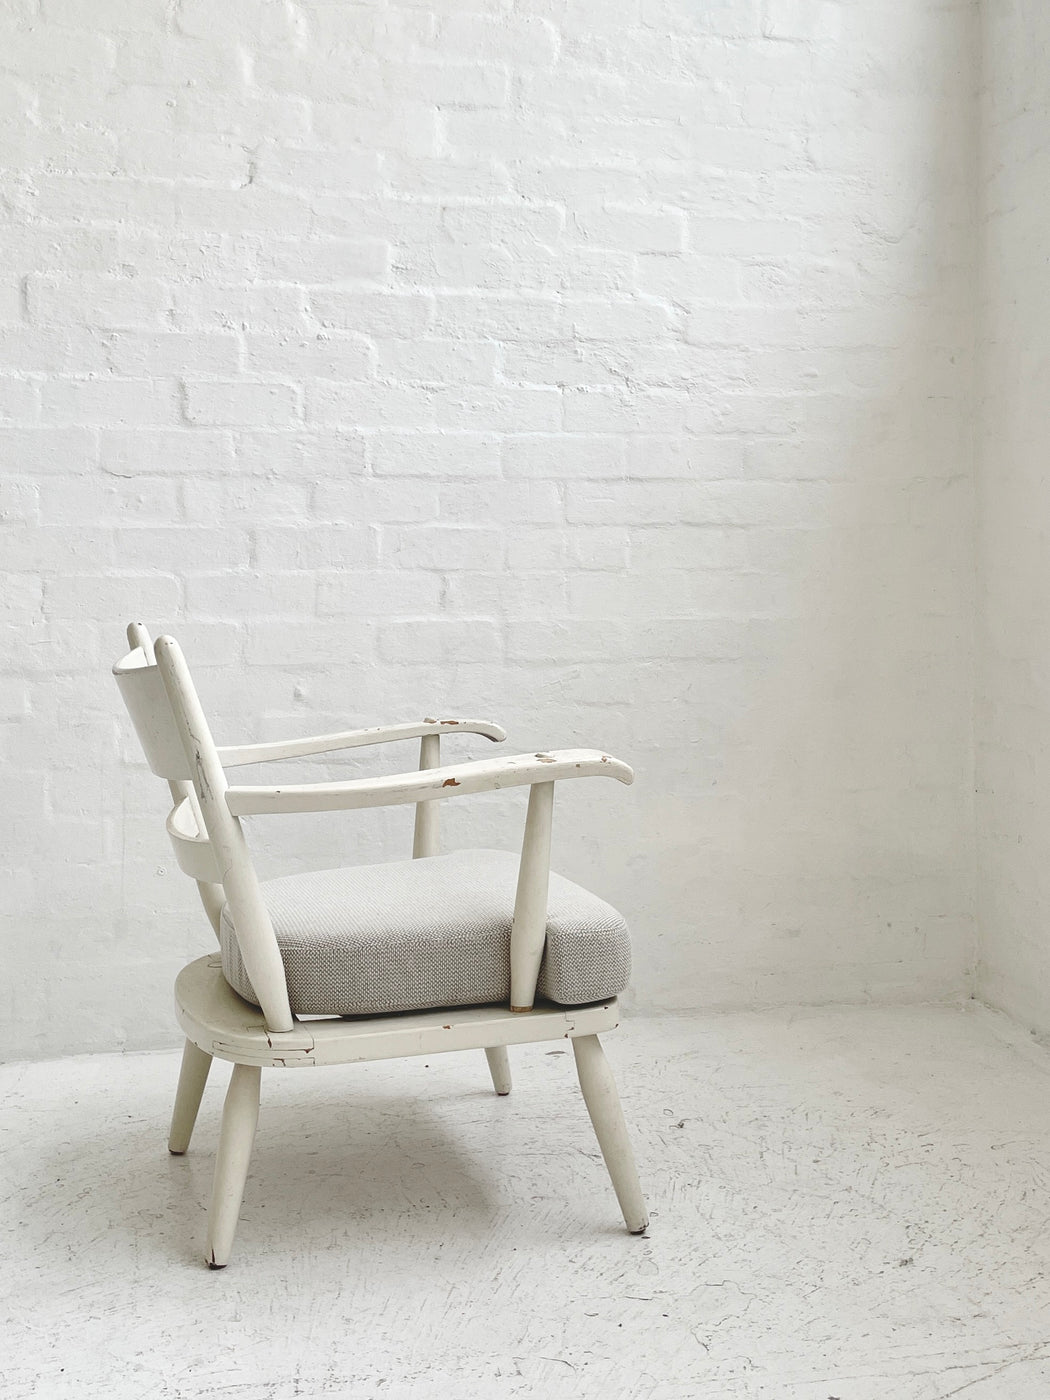 Danish 'Folk' Chair